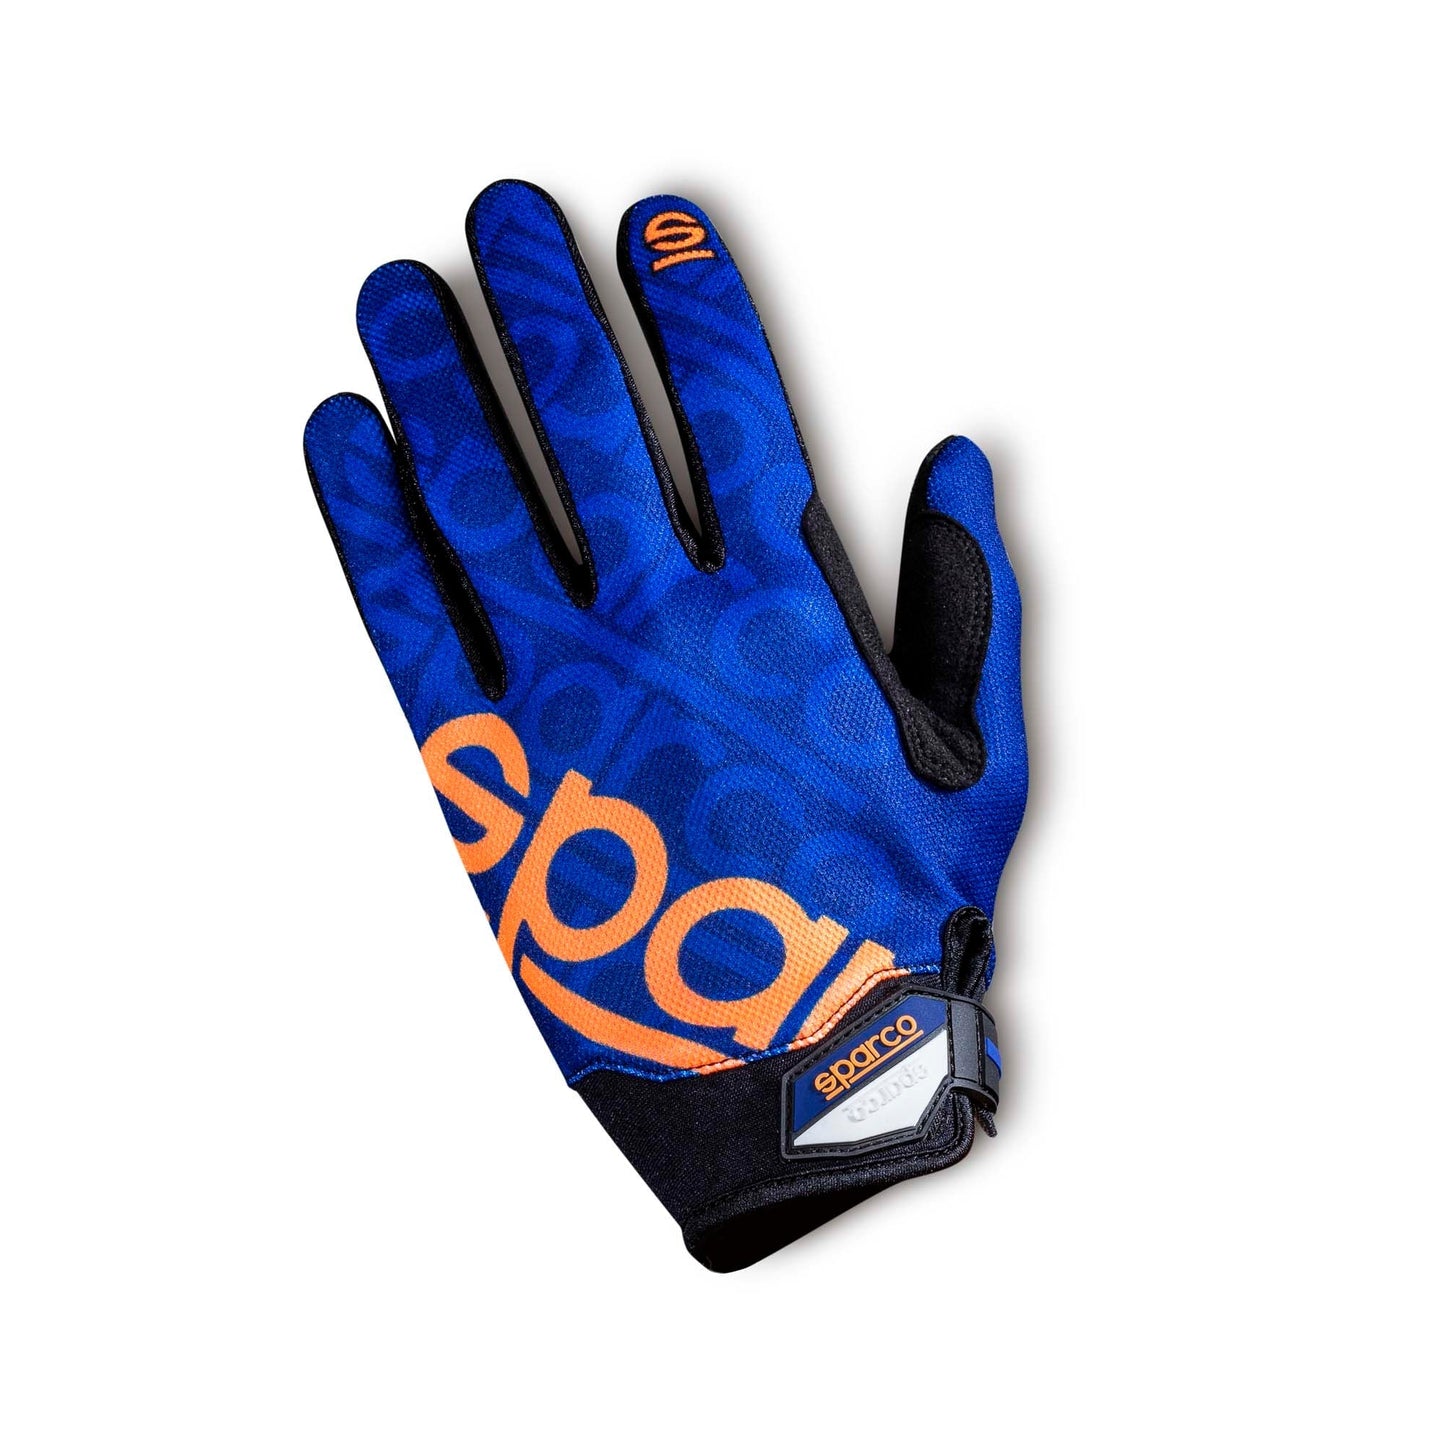 Sparco Meca 3 Mechanics Gloves